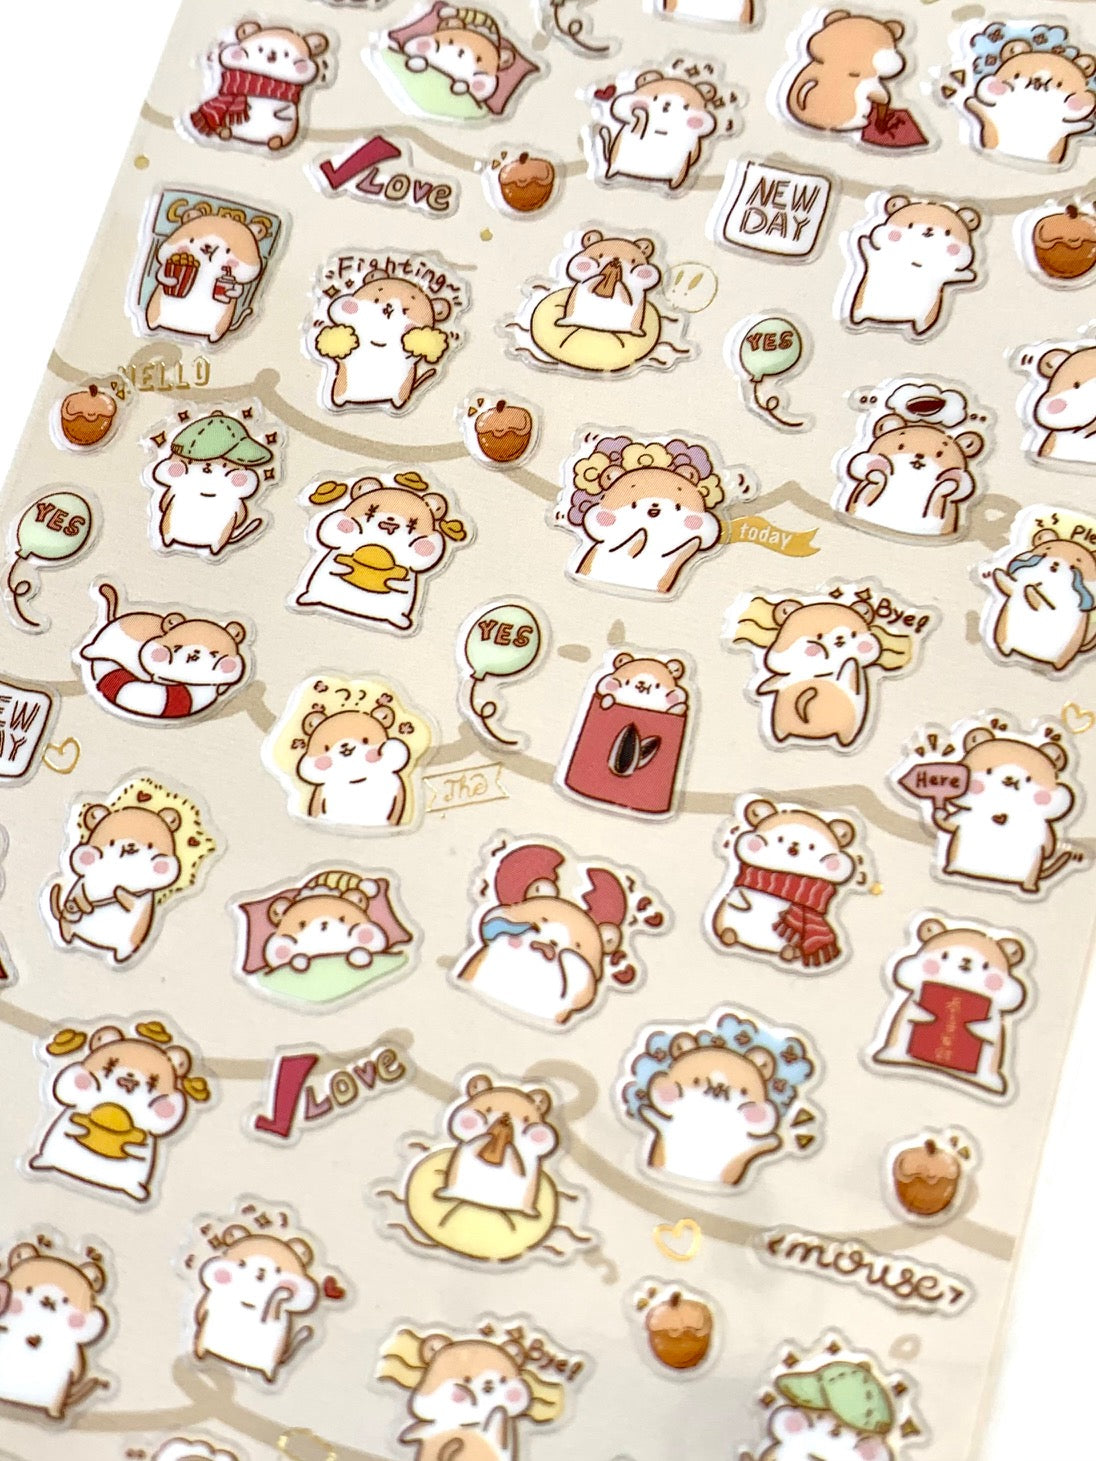 Cute Cartoon Animals Stickers Sheets Creative Stationery Kawaii